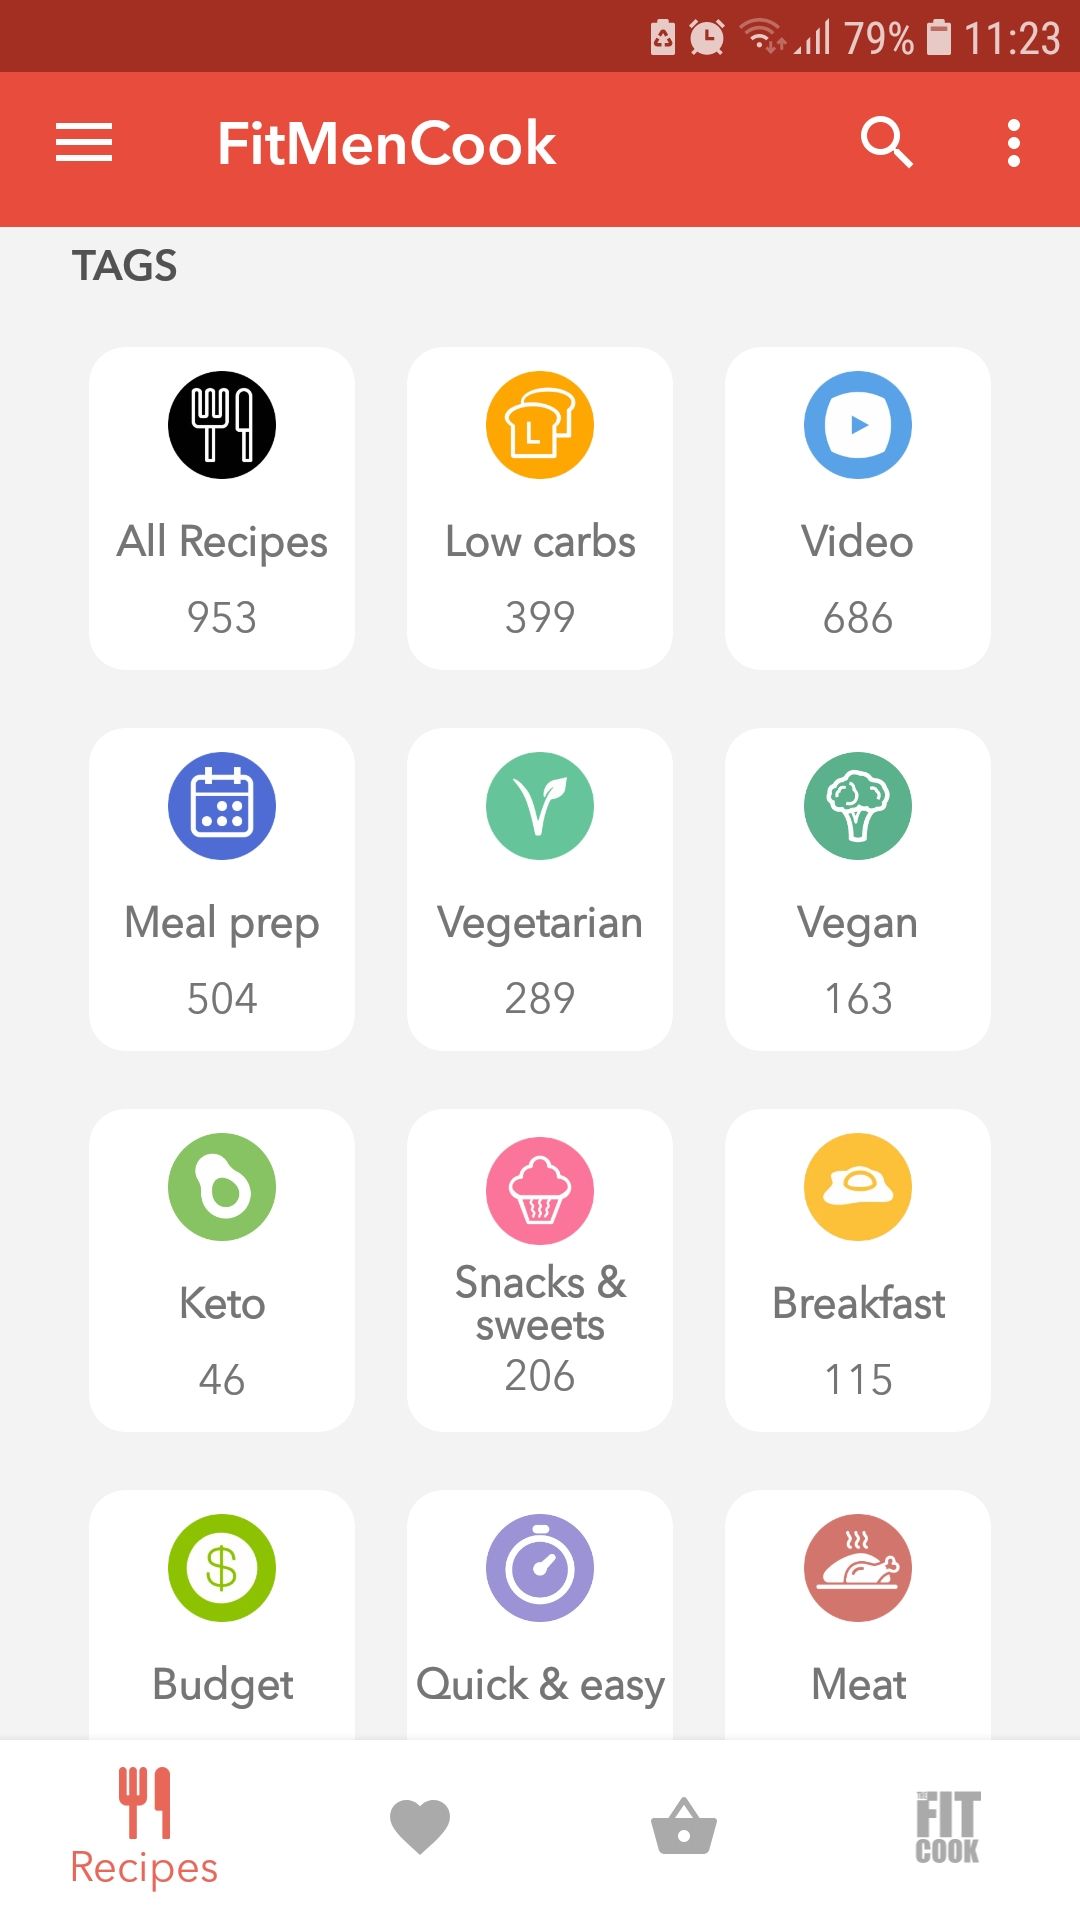 FitMenCook mobile healthy cooking app